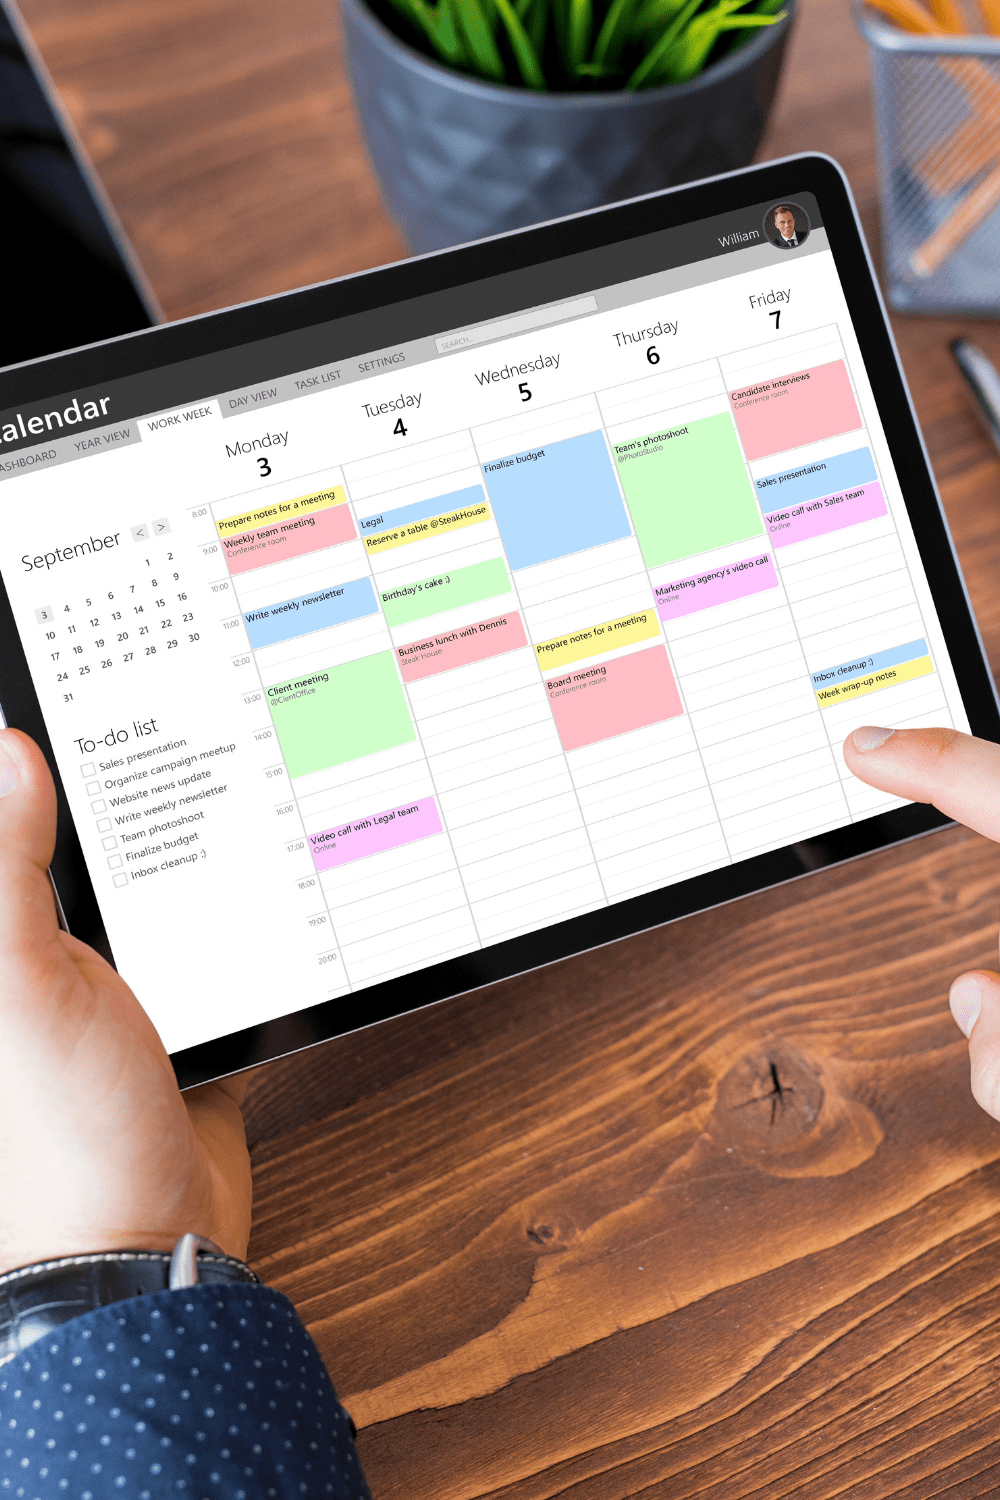 Hate calendar apps? Embrace improved scheduling